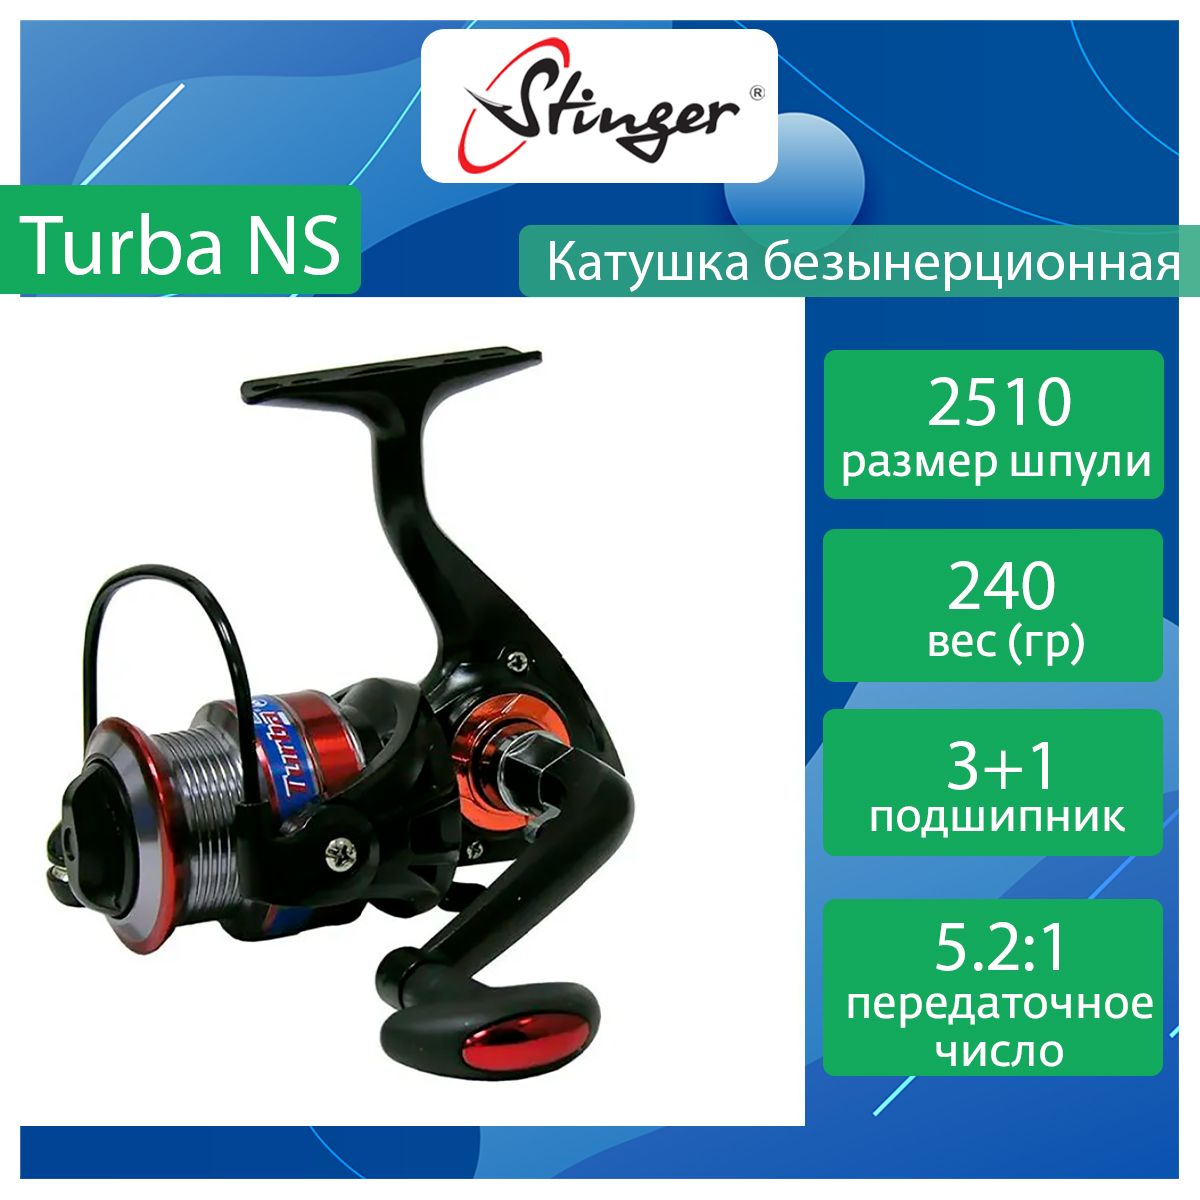 Катушка для рыбалки безынерционная Stinger Turba NS ef56846